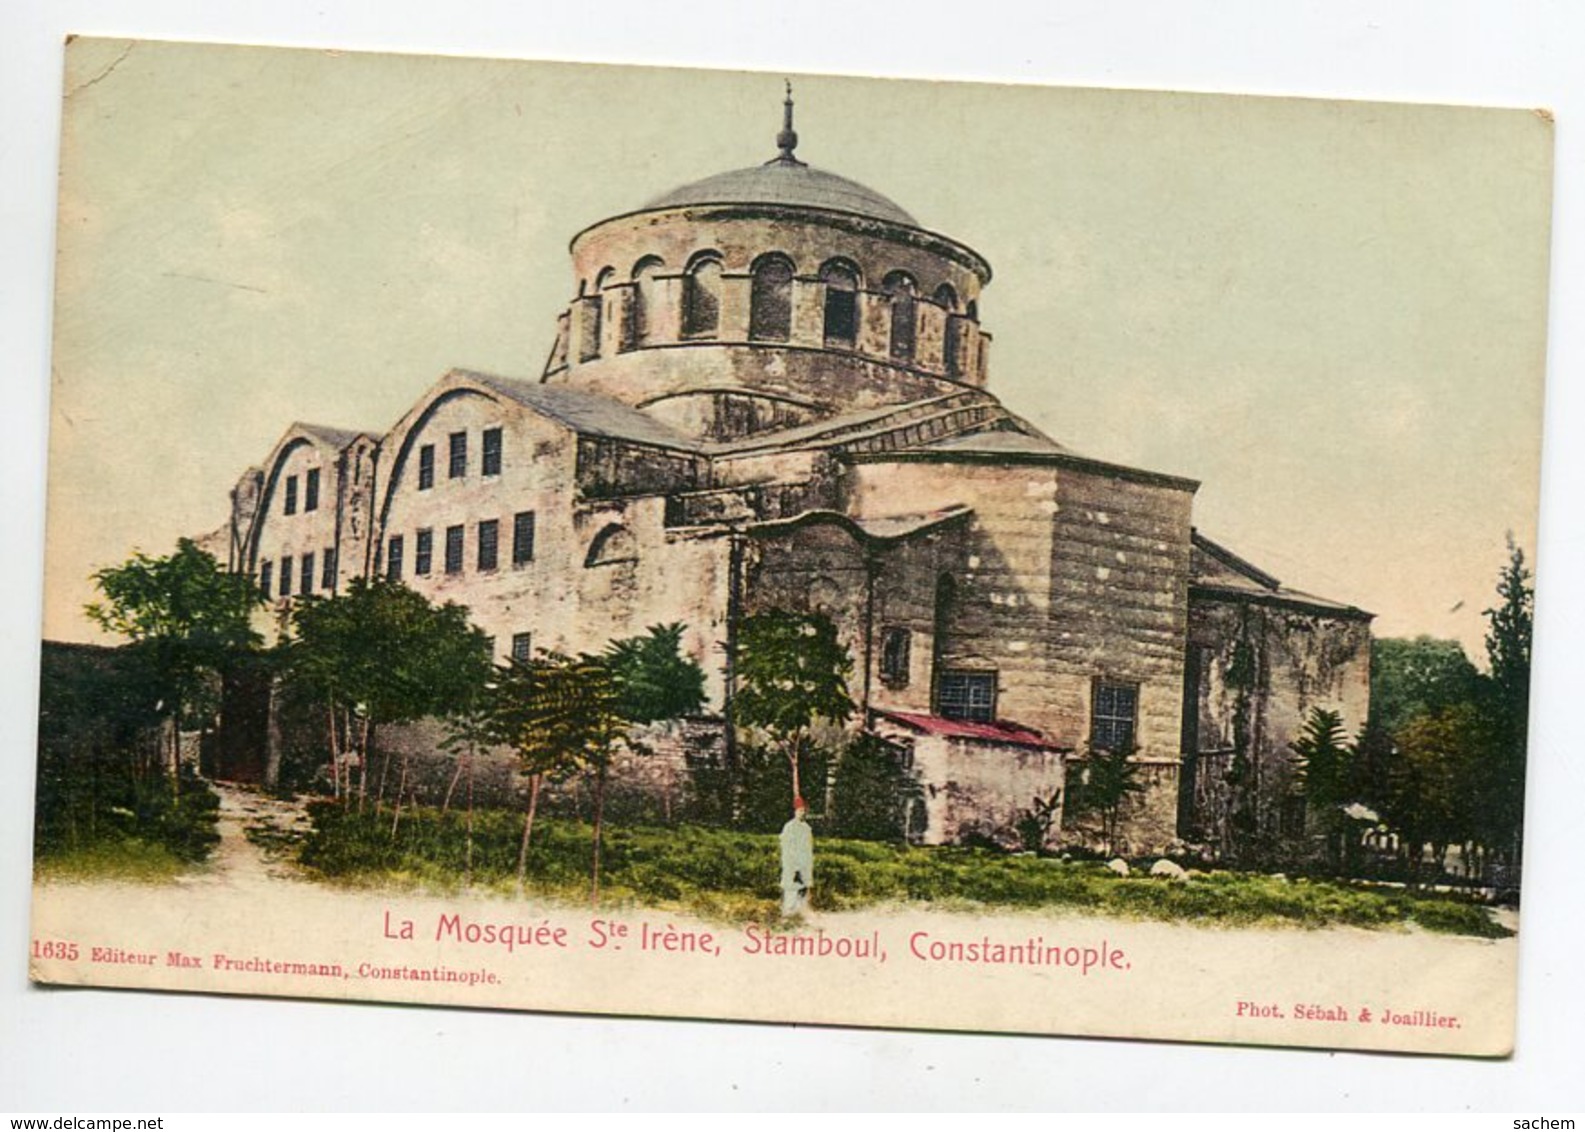 TURQUIE CONSTANTINOPLE Mosquée Ste Irène Stamboul  Edit Max Fruchtermann No 1635  Constantinople  1900       D16 2019 - Turquie